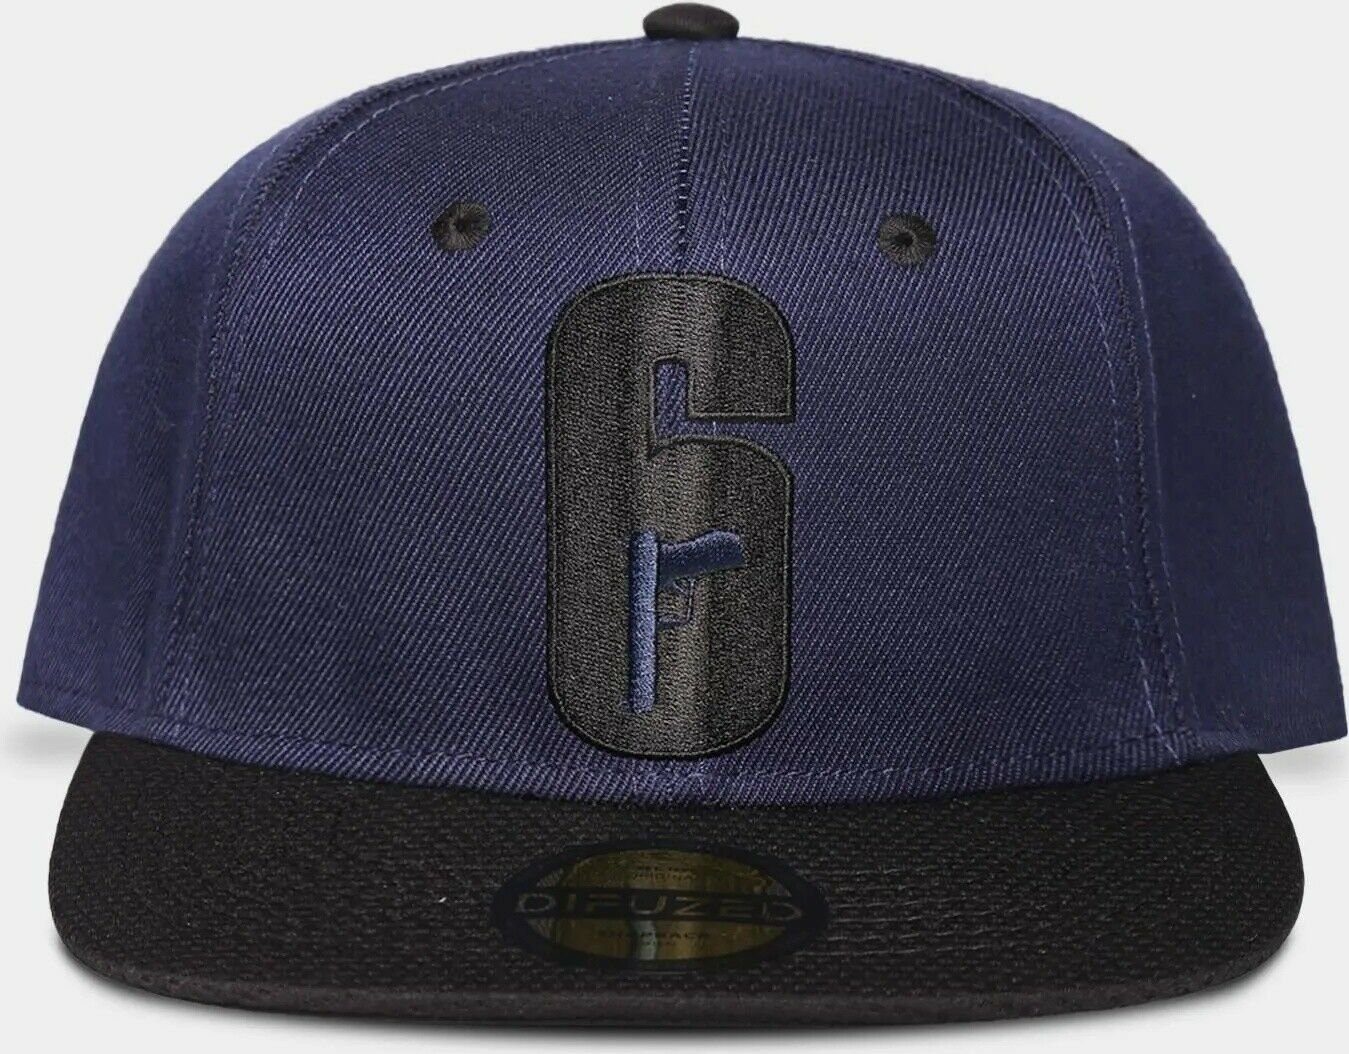 6 Siege Baseball Cap 6-Siege - Logo - Men's Snapback Cap Blue Neu Top